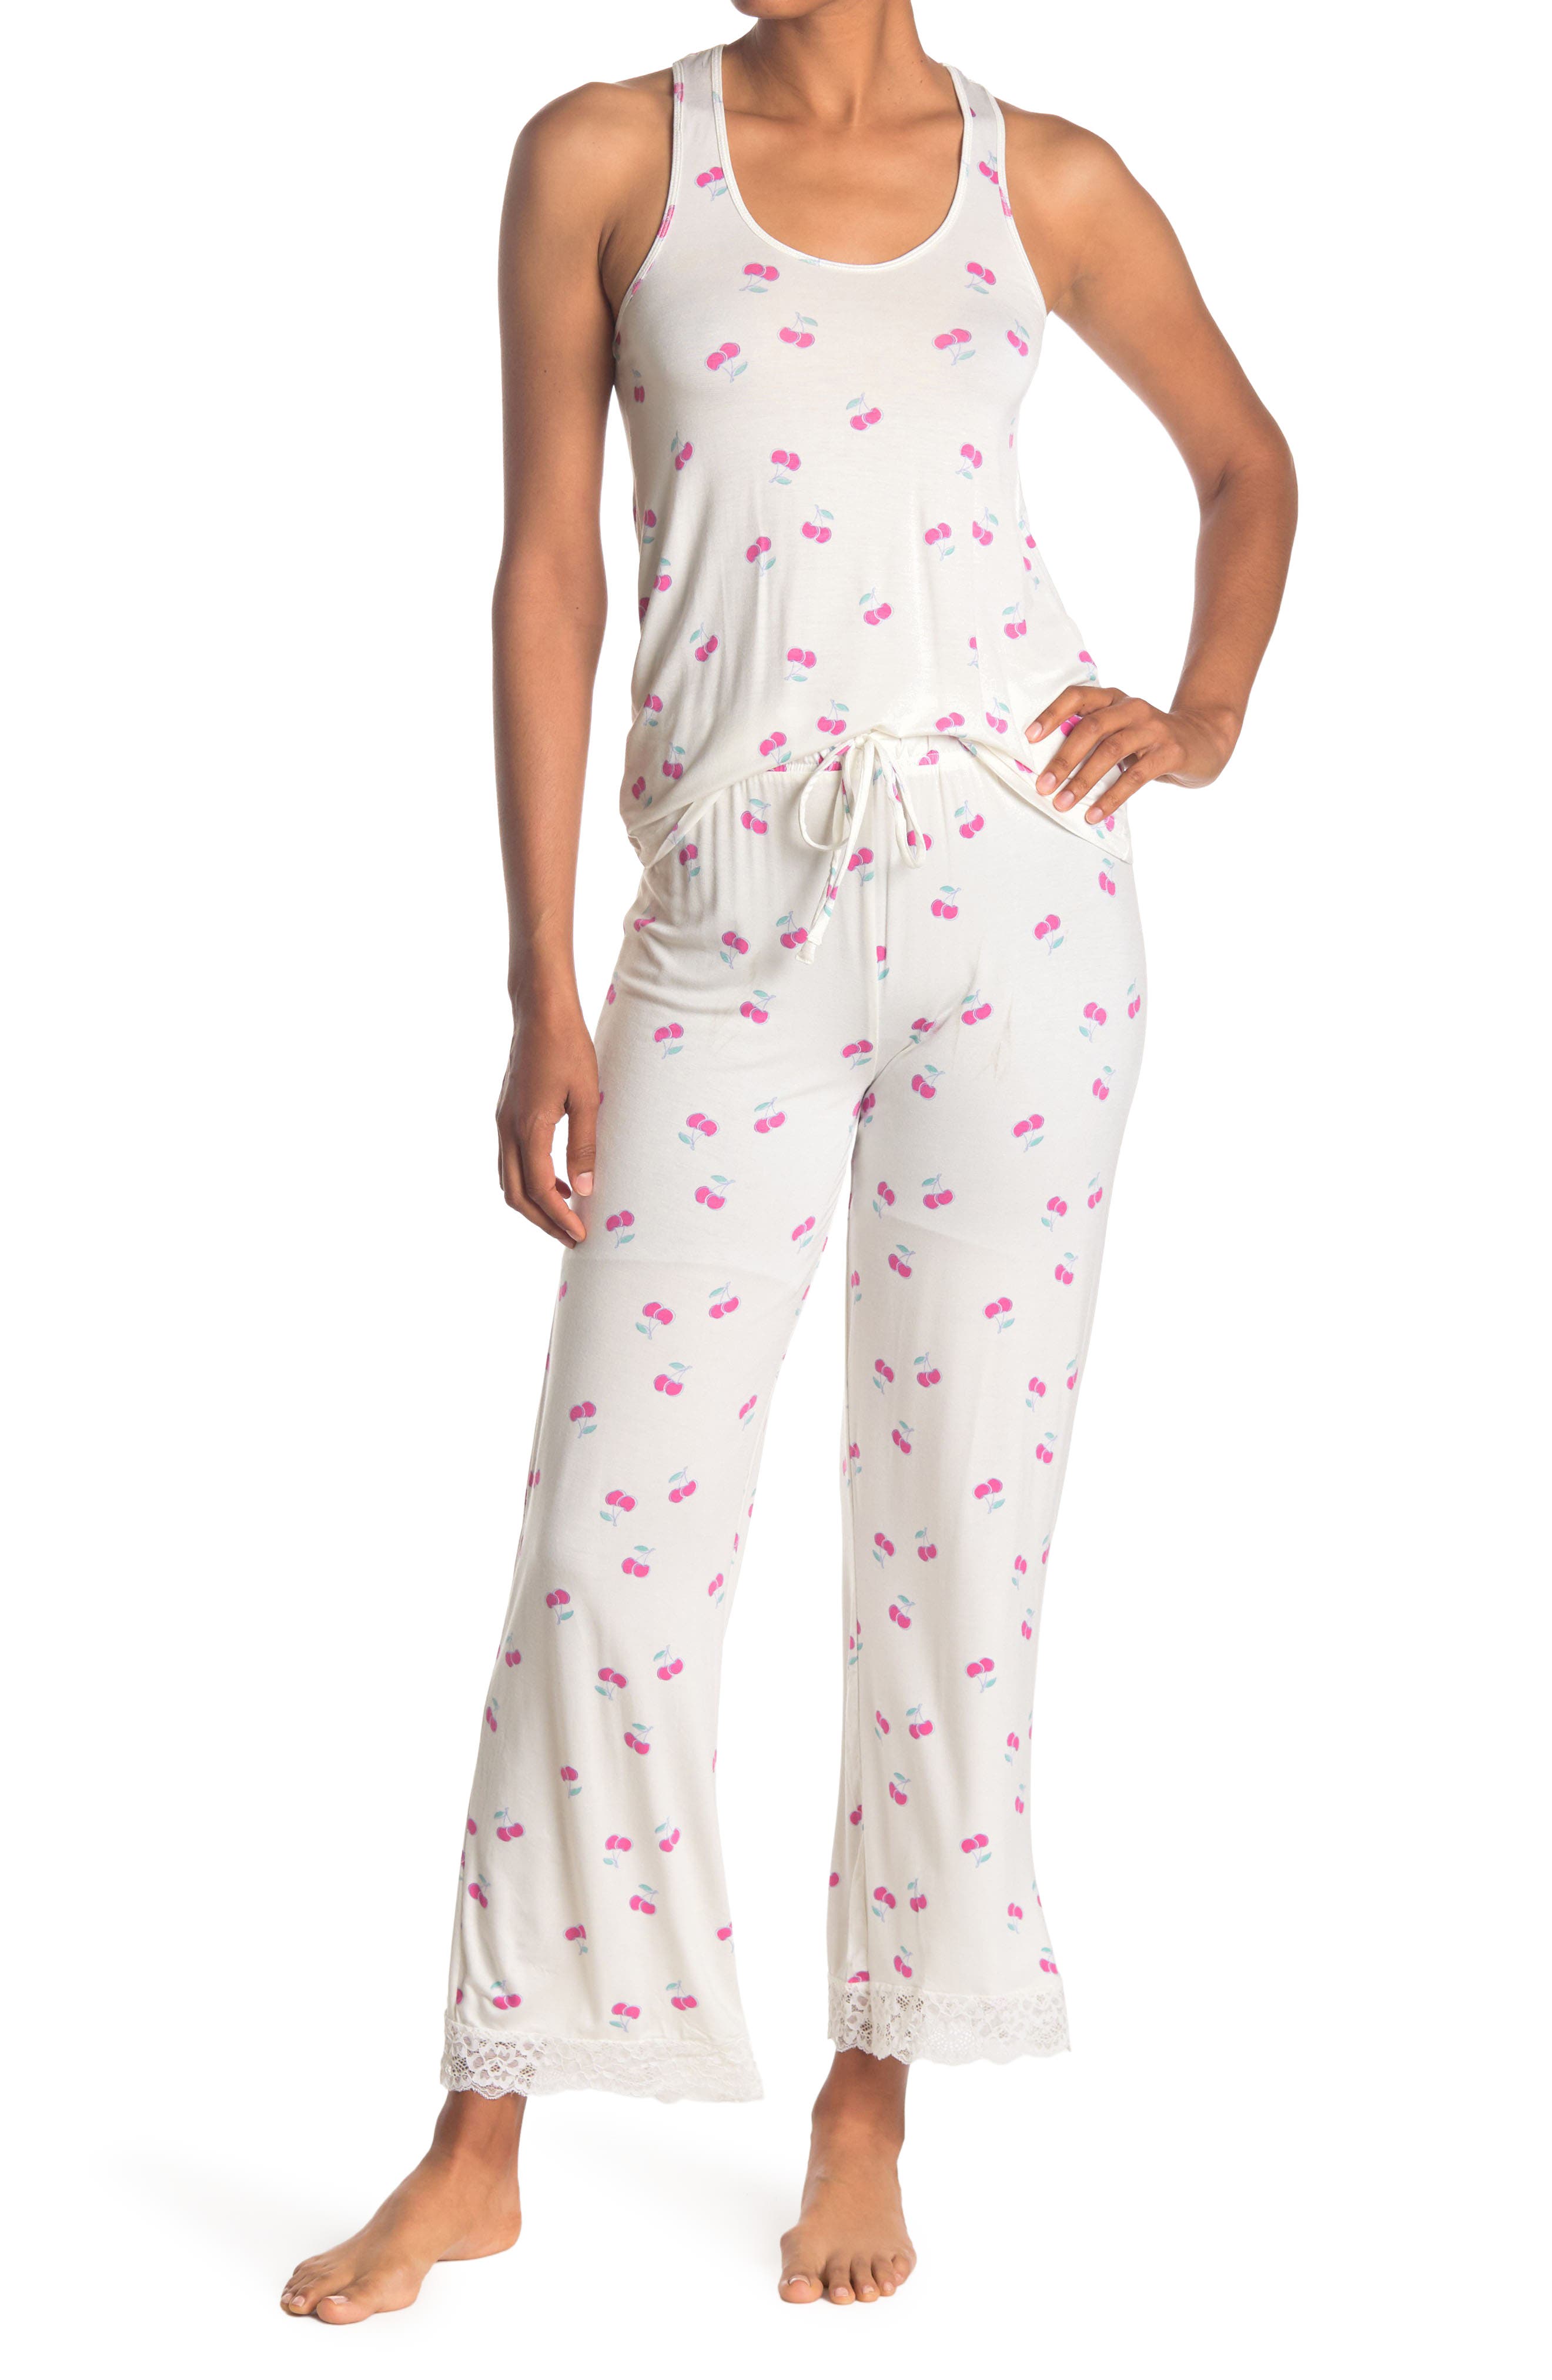 Honeydew Intimates Striped Lace Trim Tank & Pants 2-piece Pajama Set In Ivorycherries